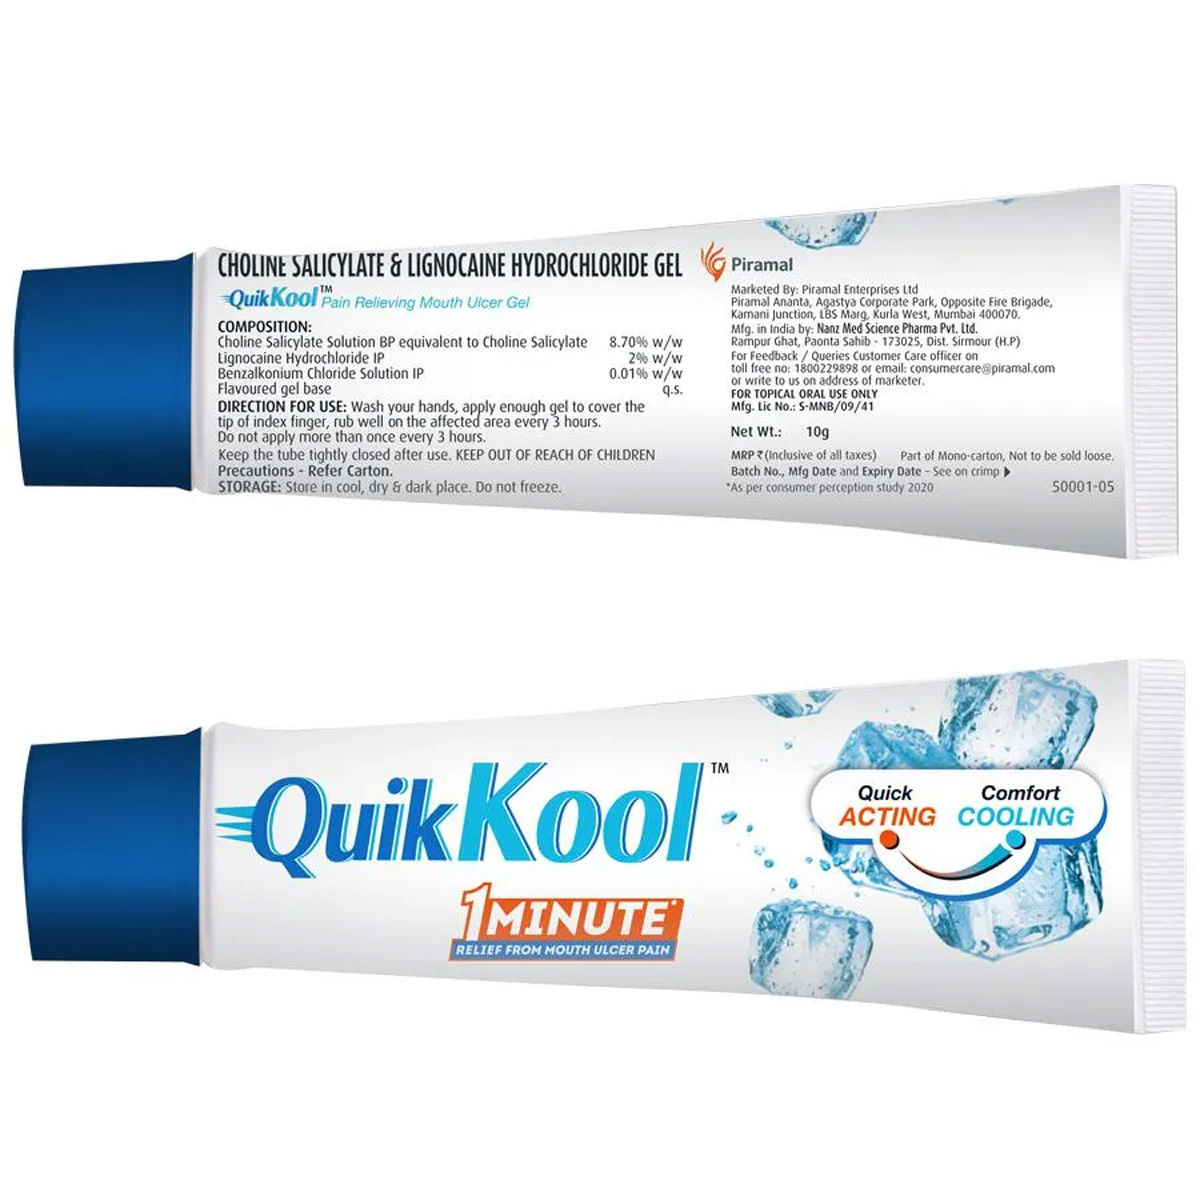 Quik Kool Mouth Ulcer Gel, 10 gm, Pack of 1 